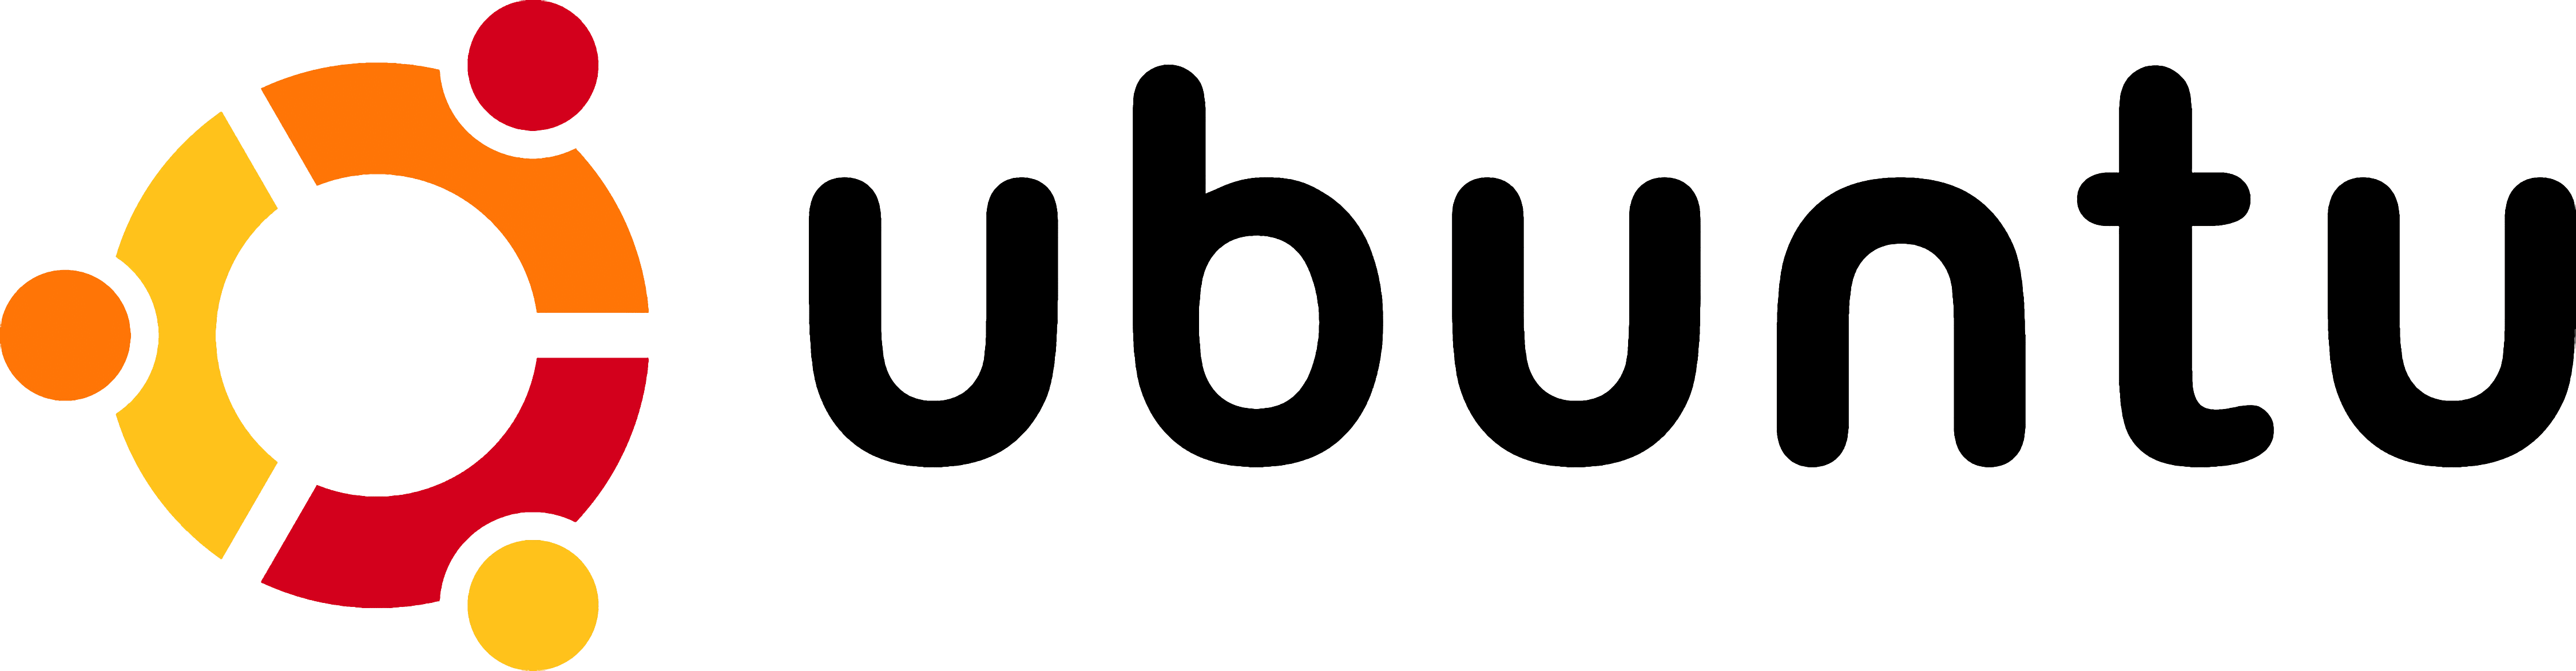 Official ubuntu logo. Source.